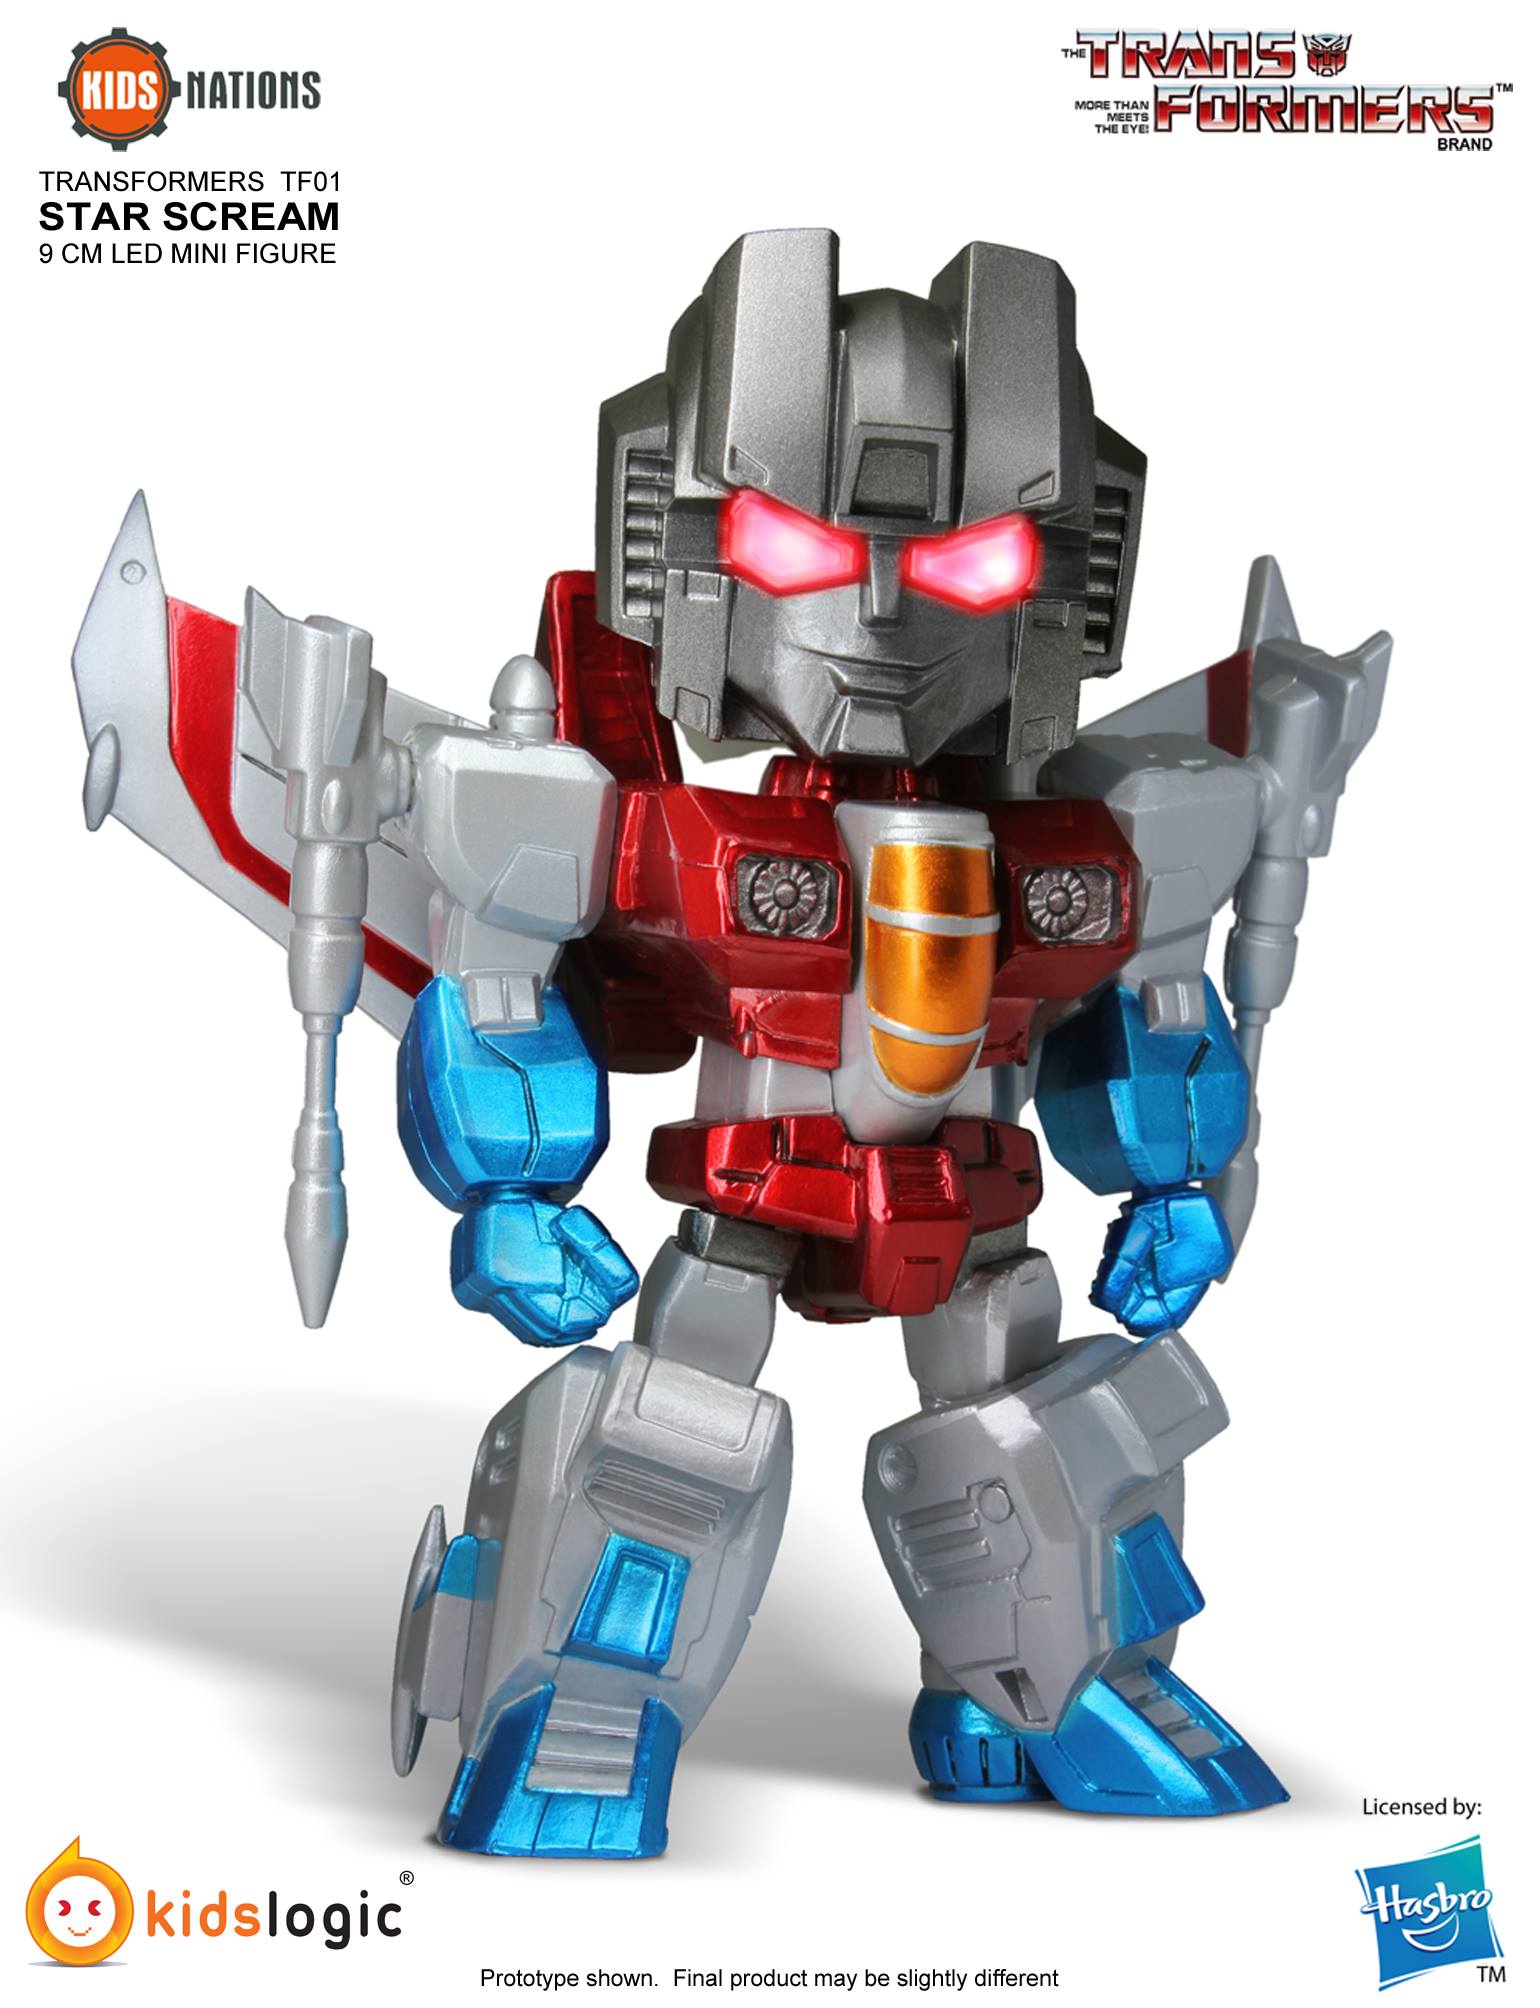 Transformers - Kids Logic TF01 set of 5 mini figures